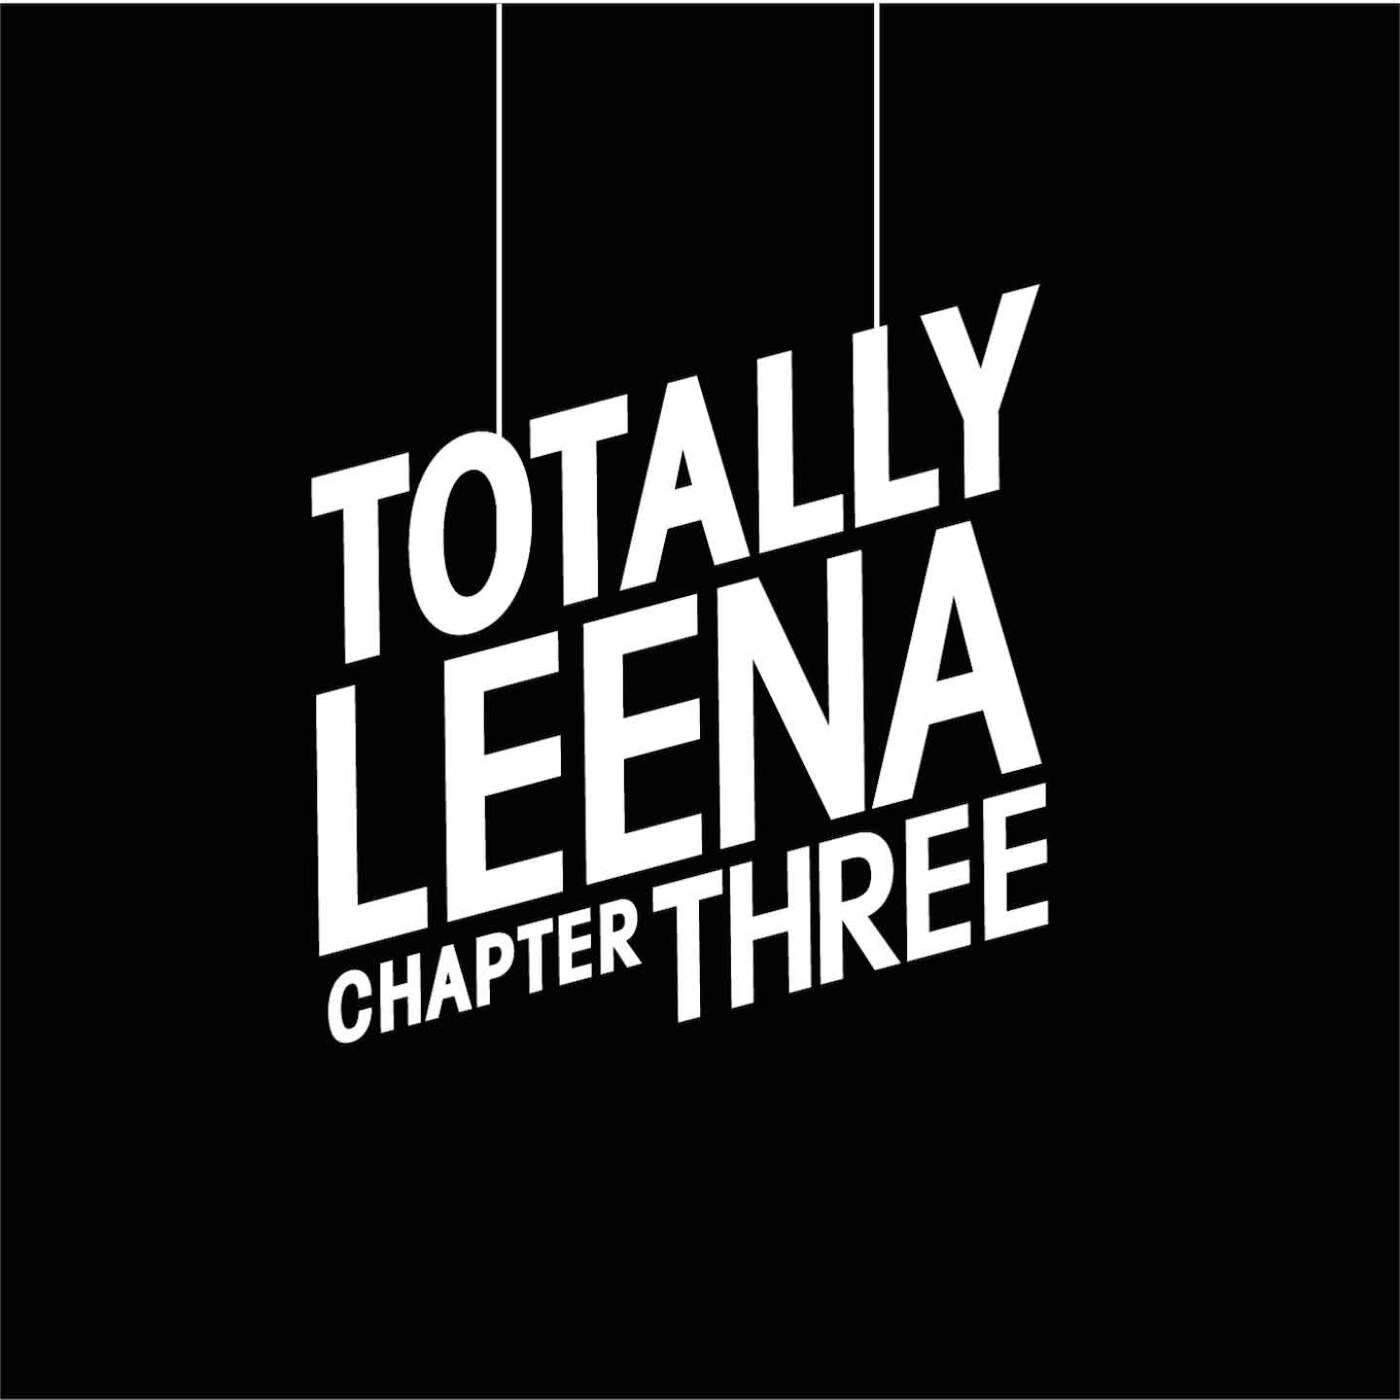 Totally Leena - Chapter Three